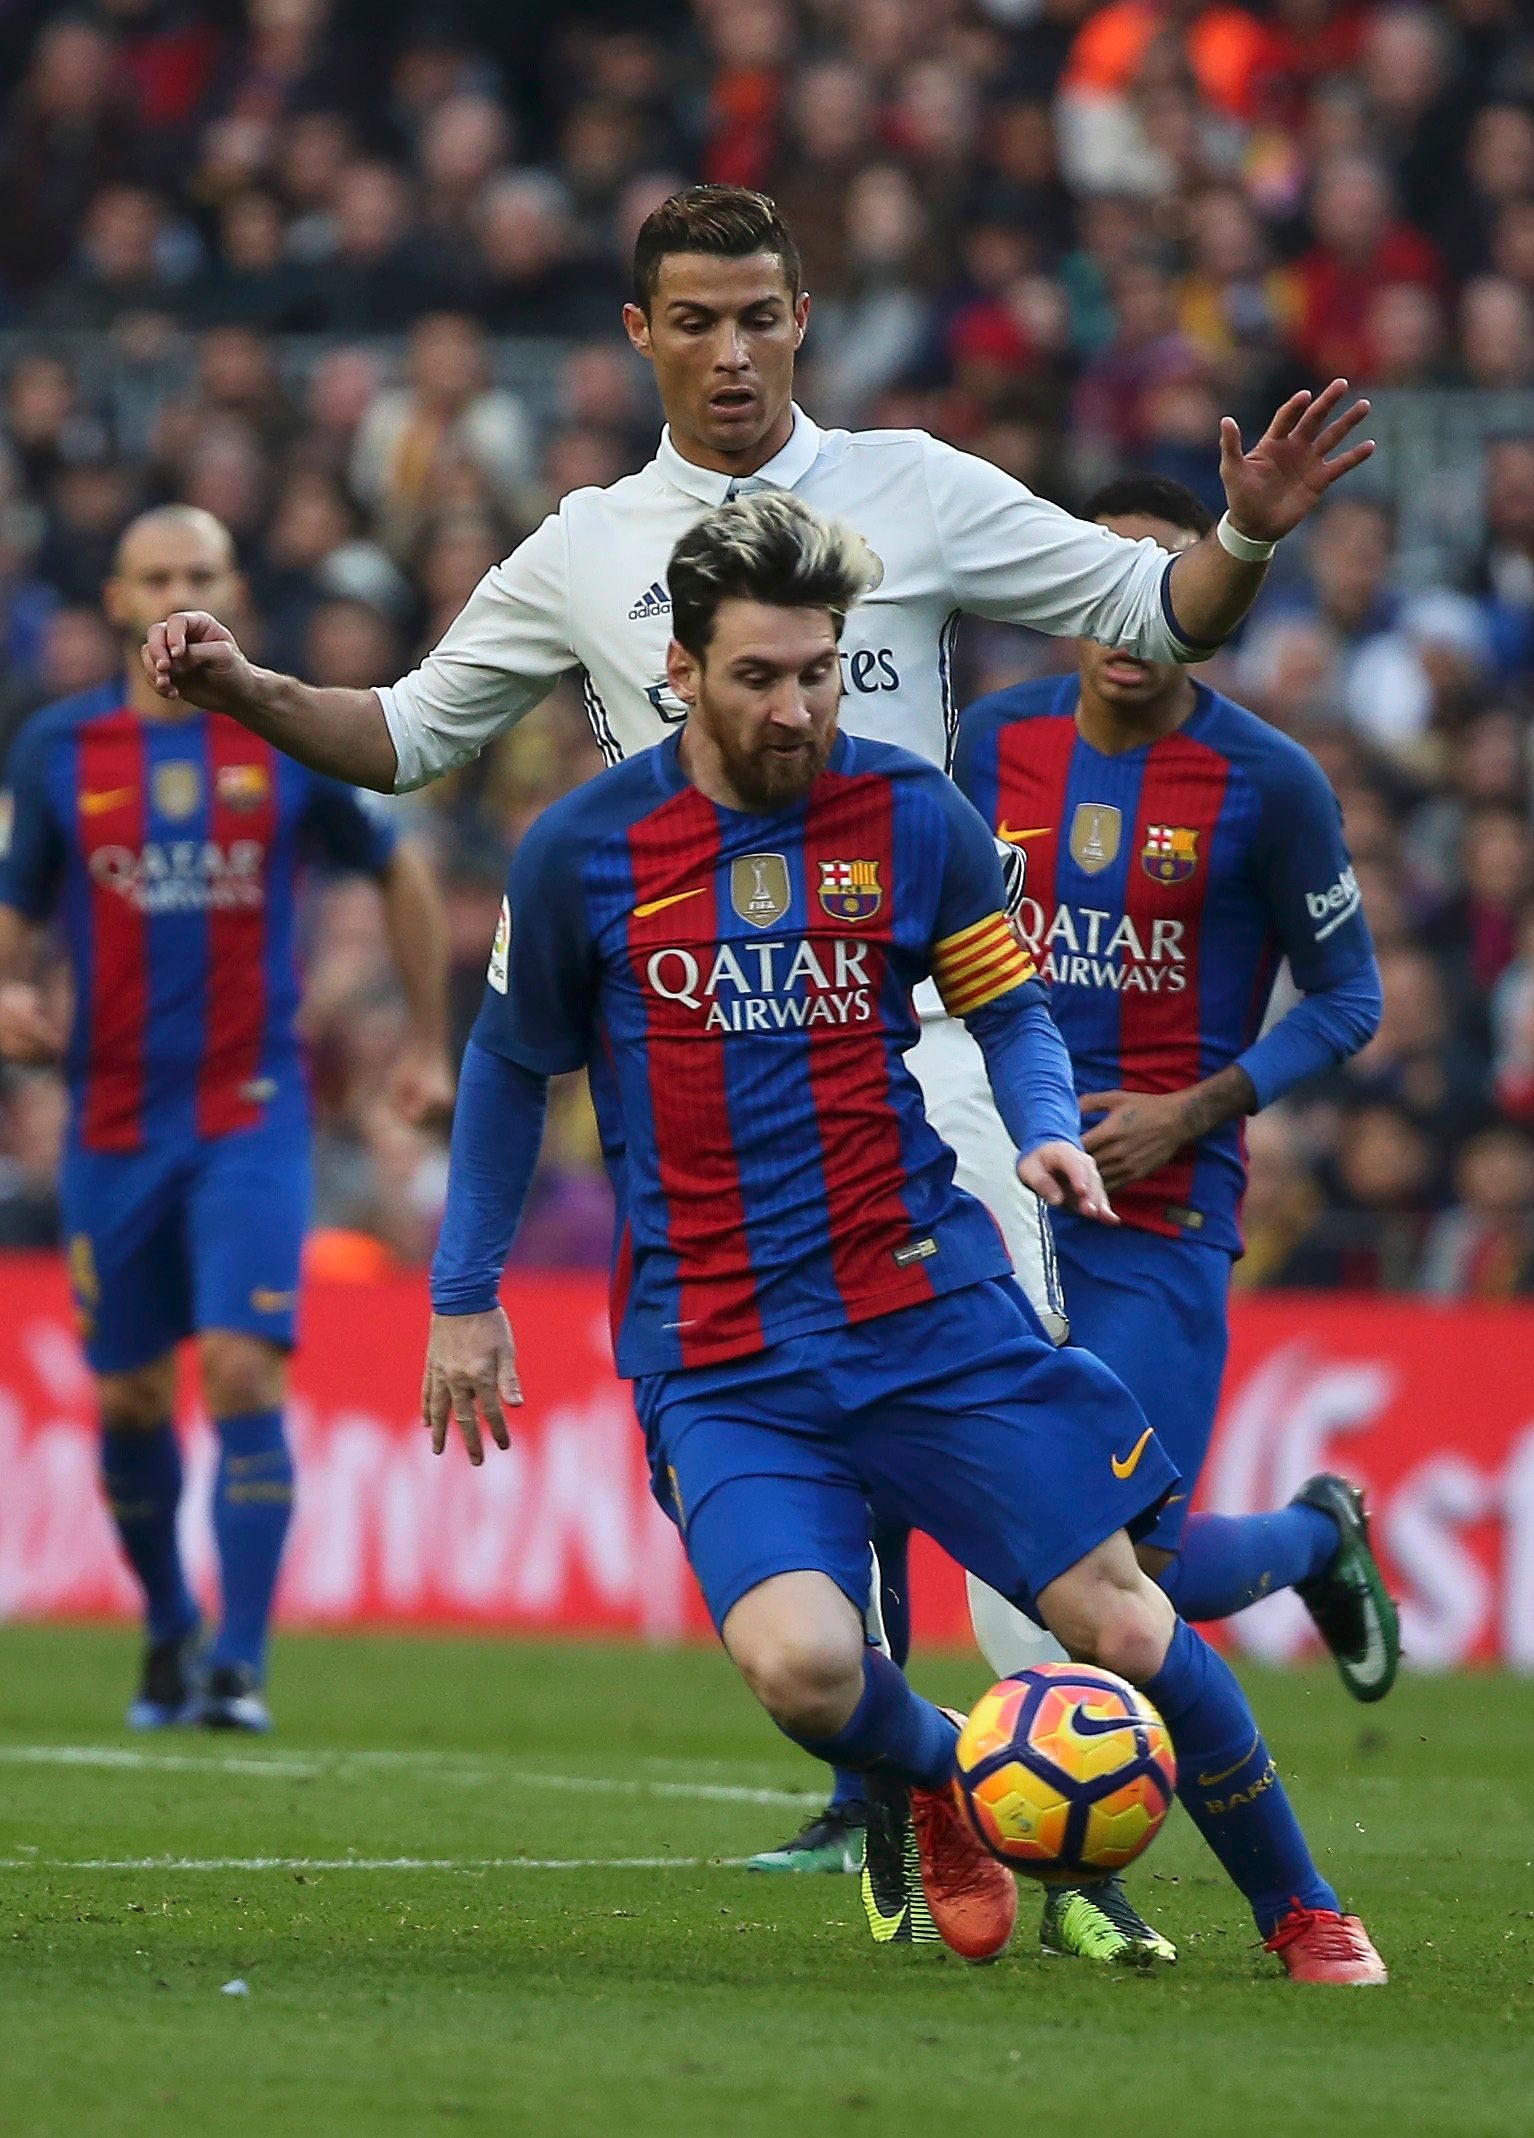 Ronaldo and Messi in action during El Clasico.